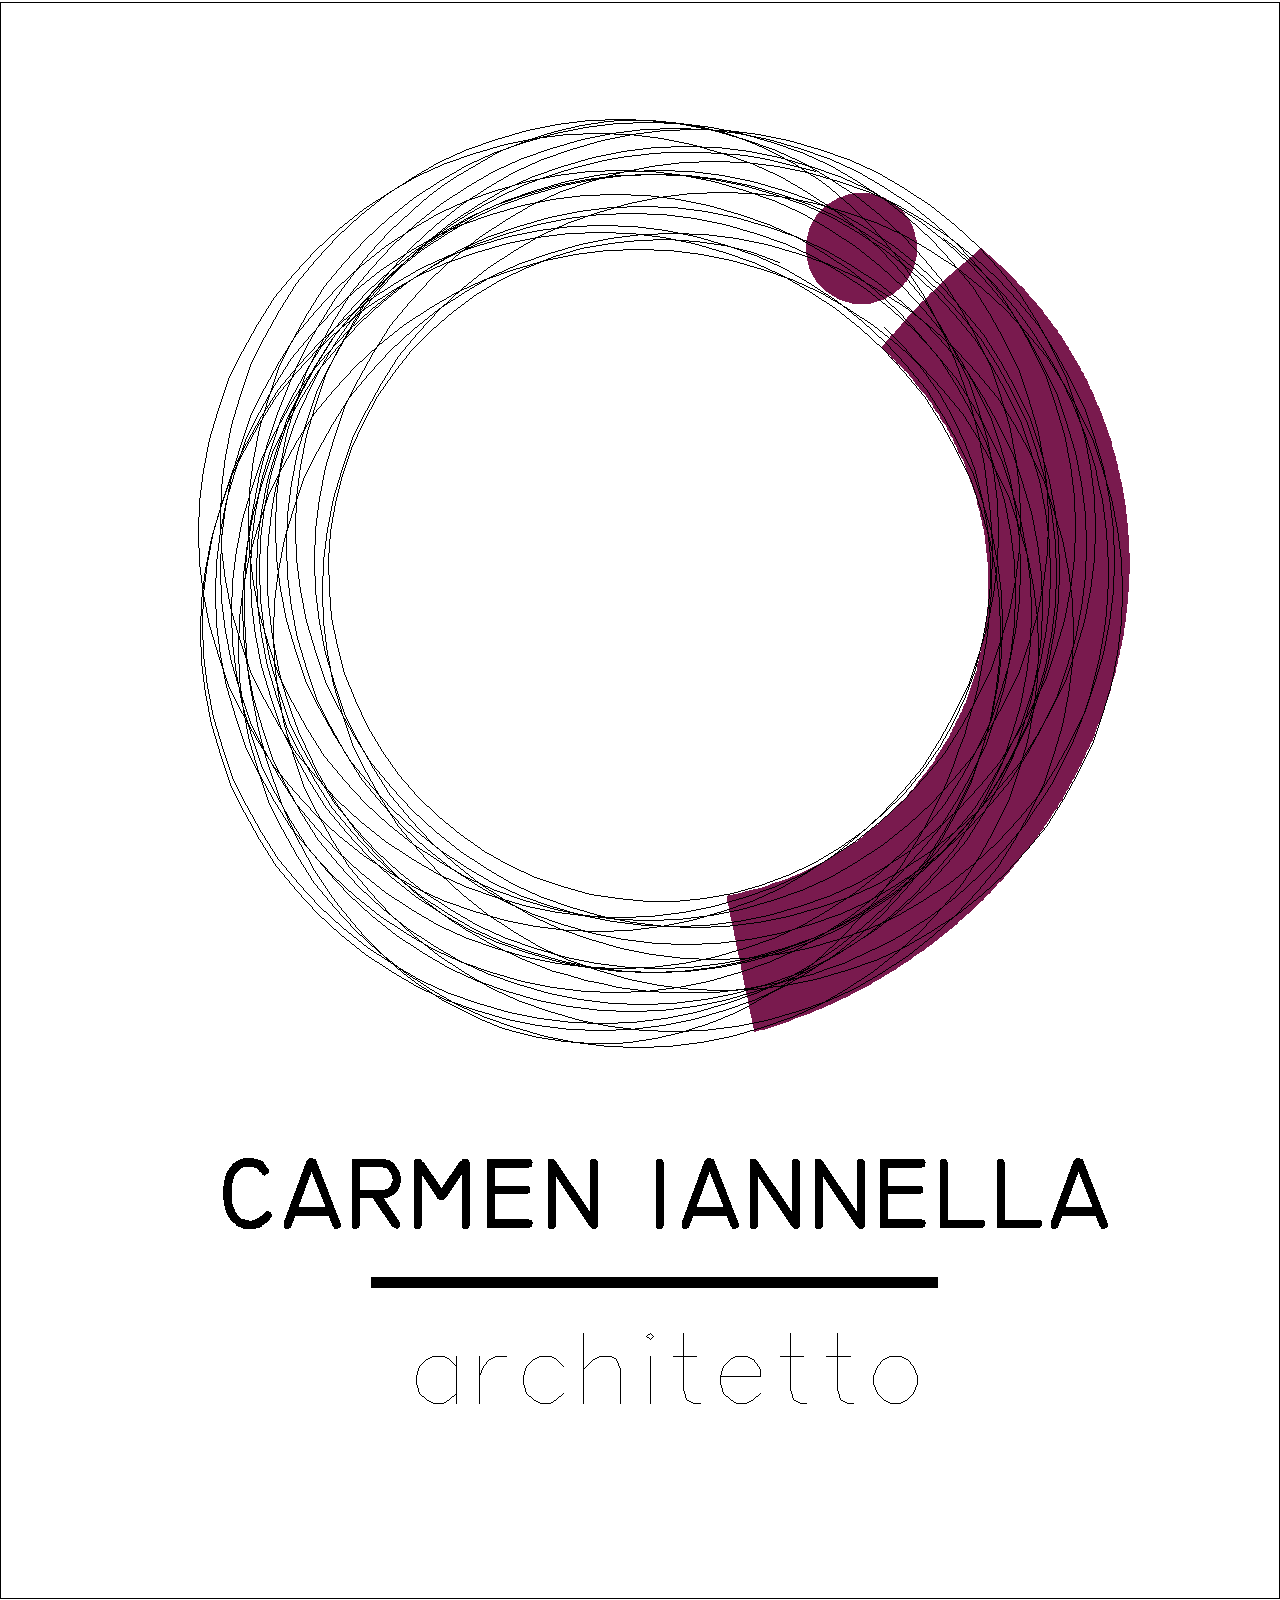 Carmen Iannella